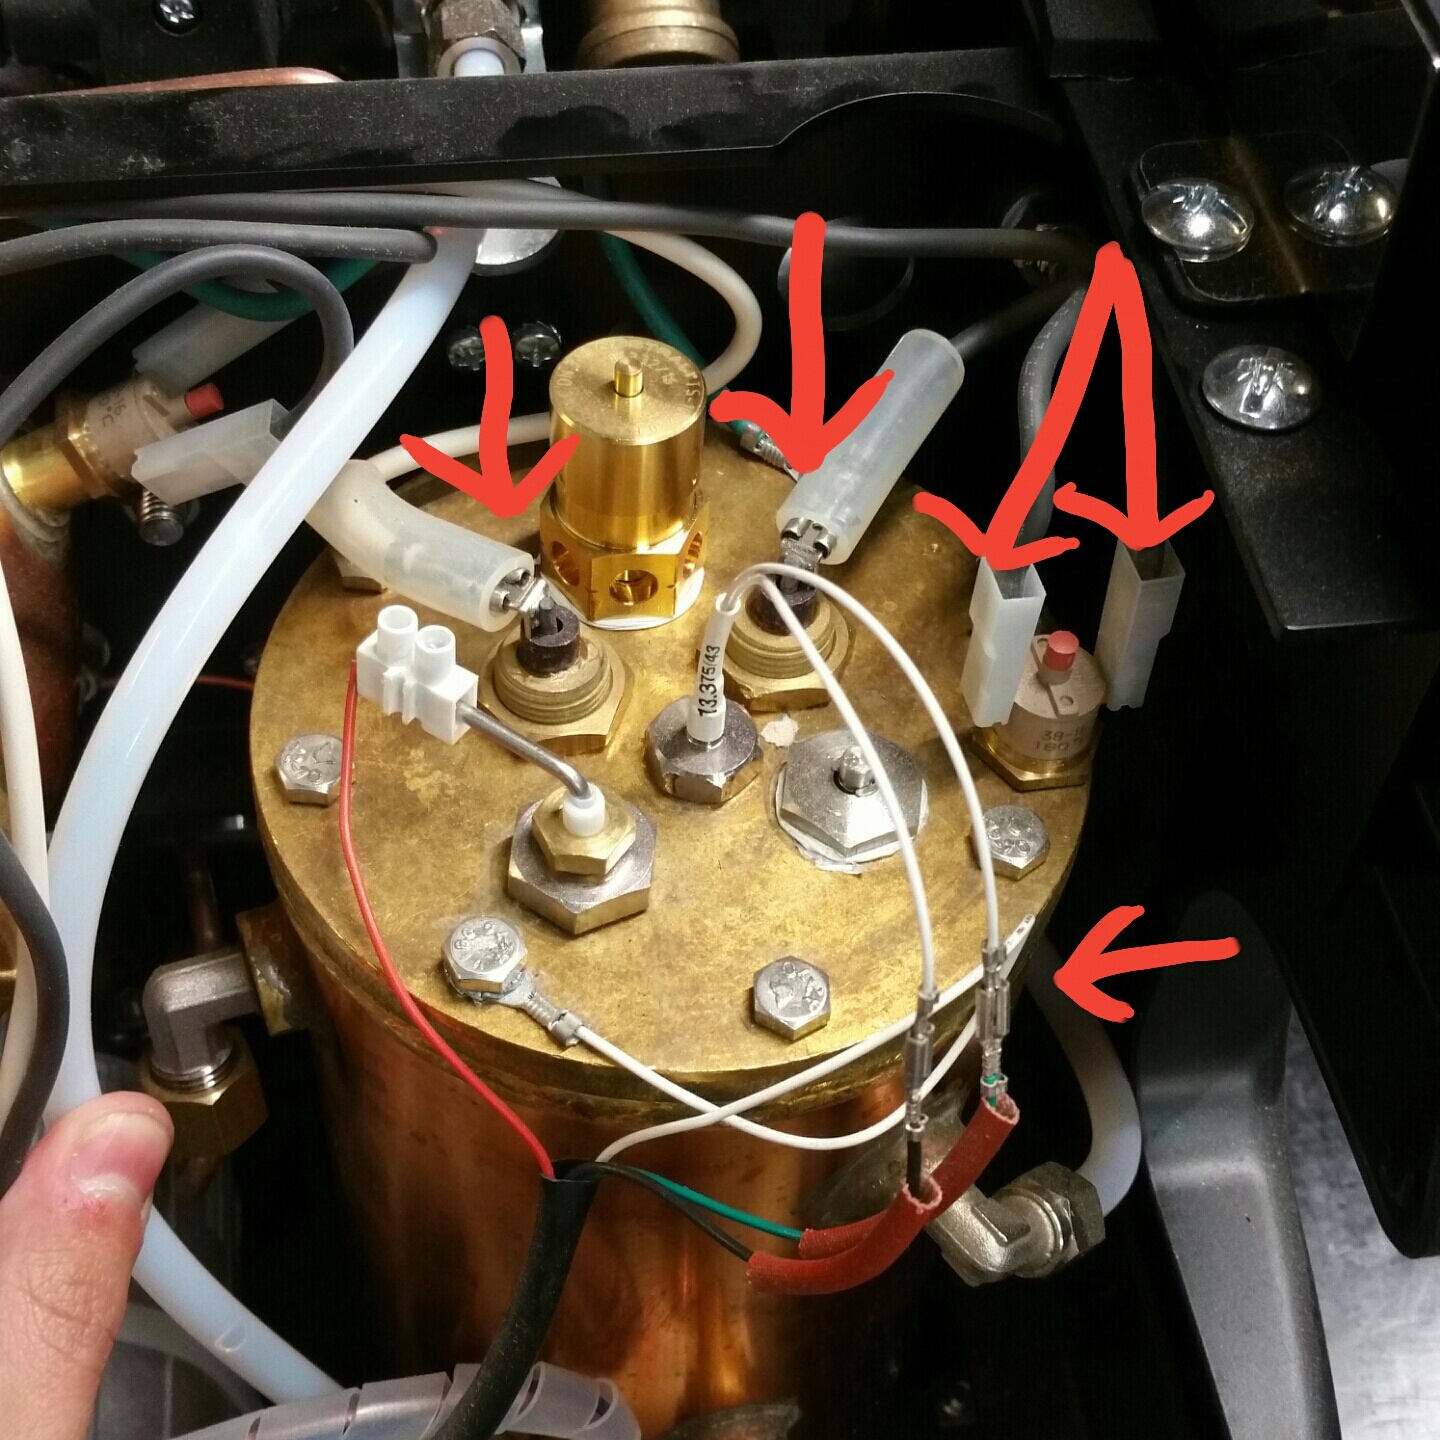 LUCCA A53 Mini: Steam Boiler Not Heating